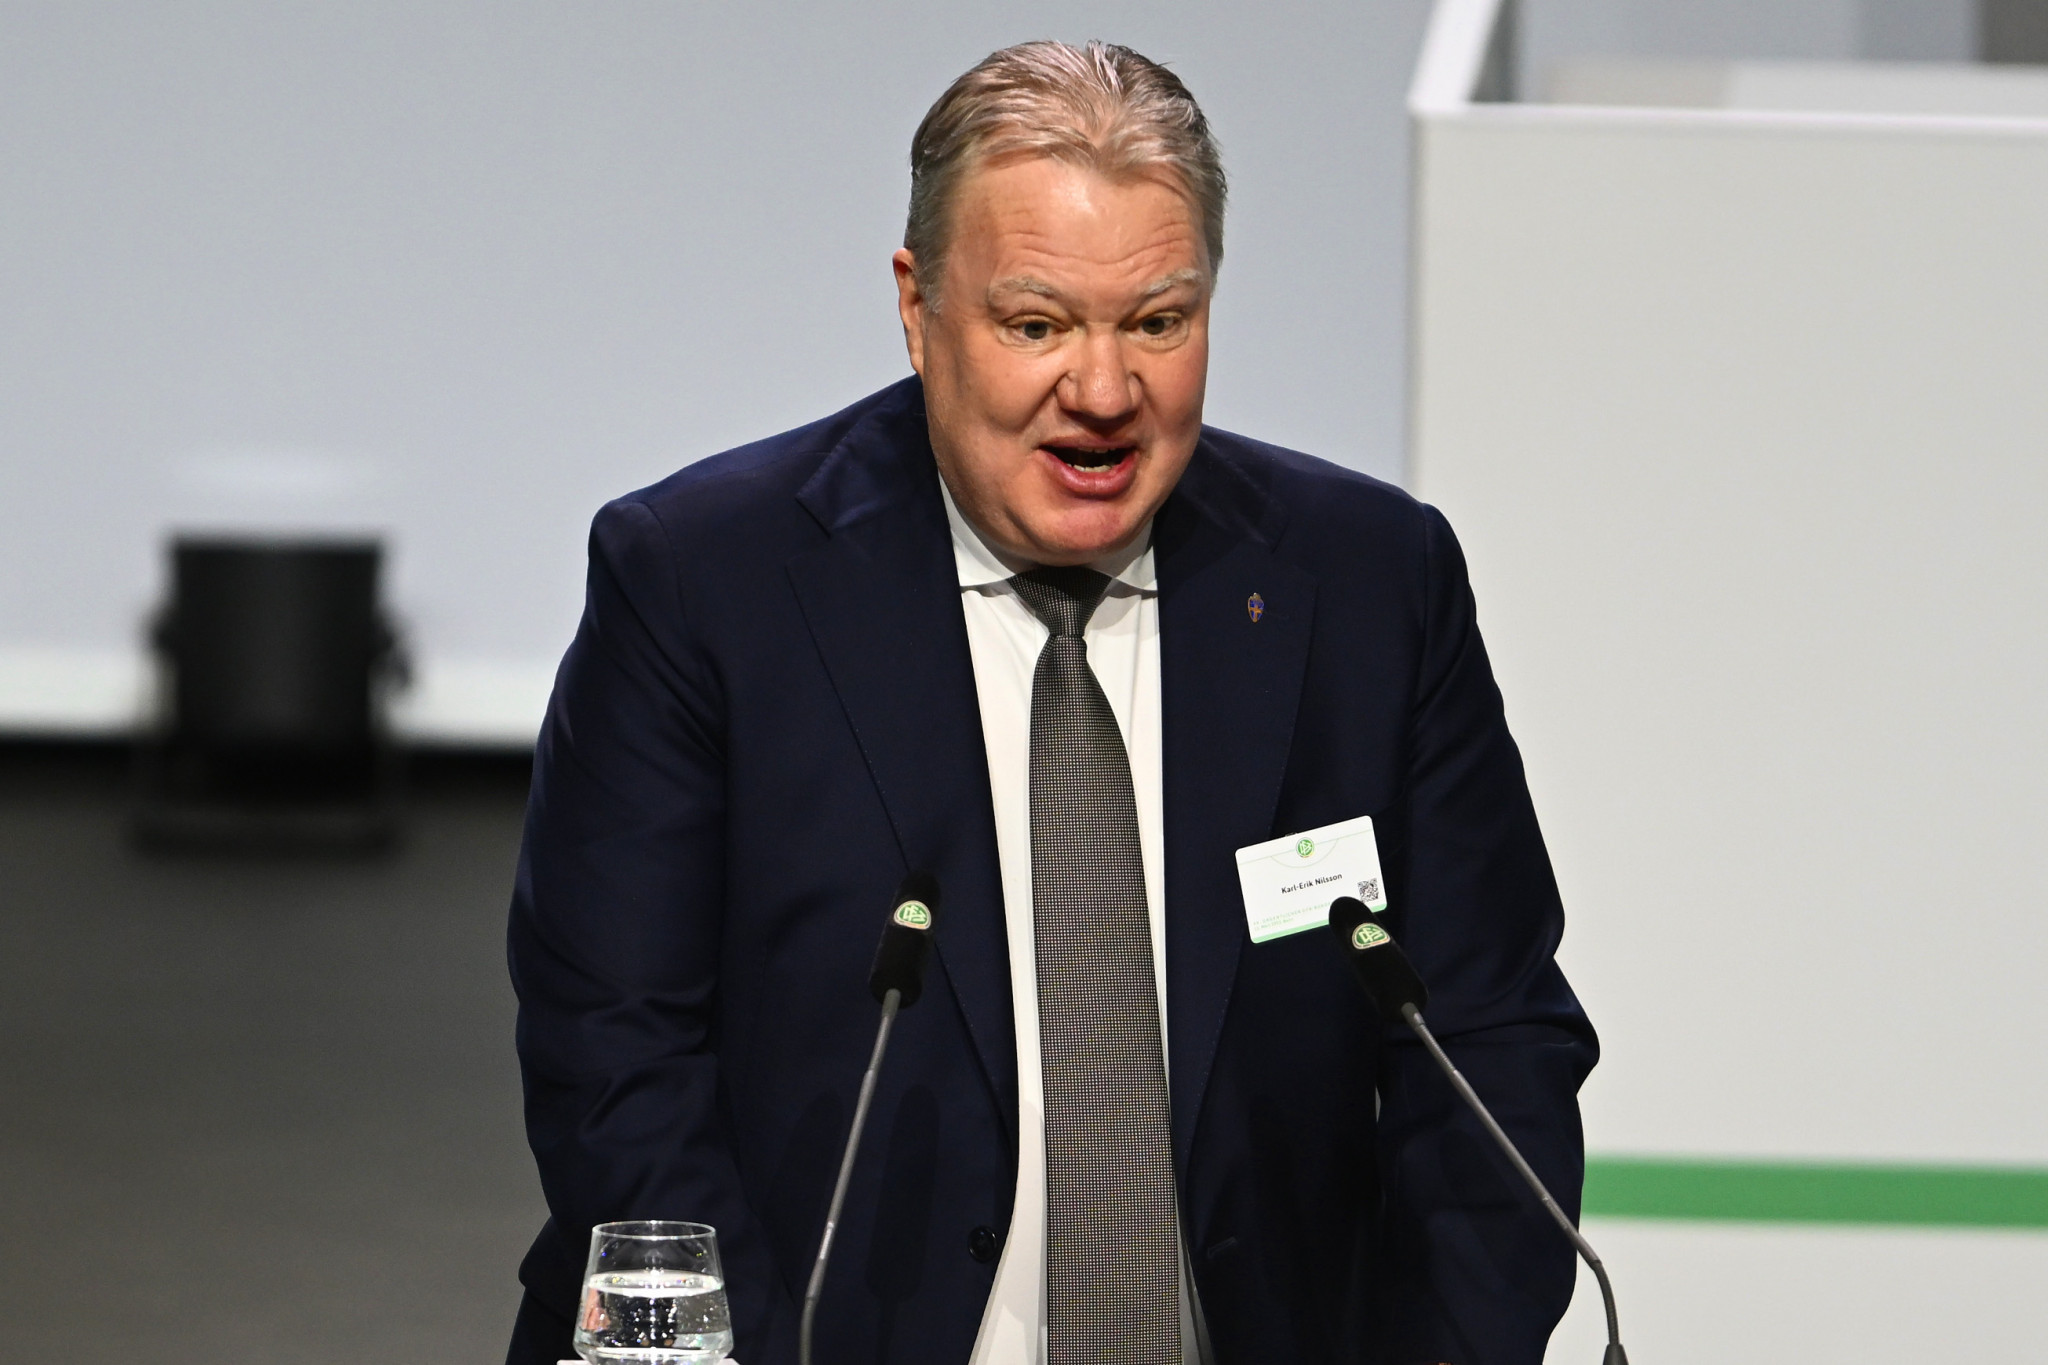 UEFA vice-president Nilsson to step down as Swedish Football Association President